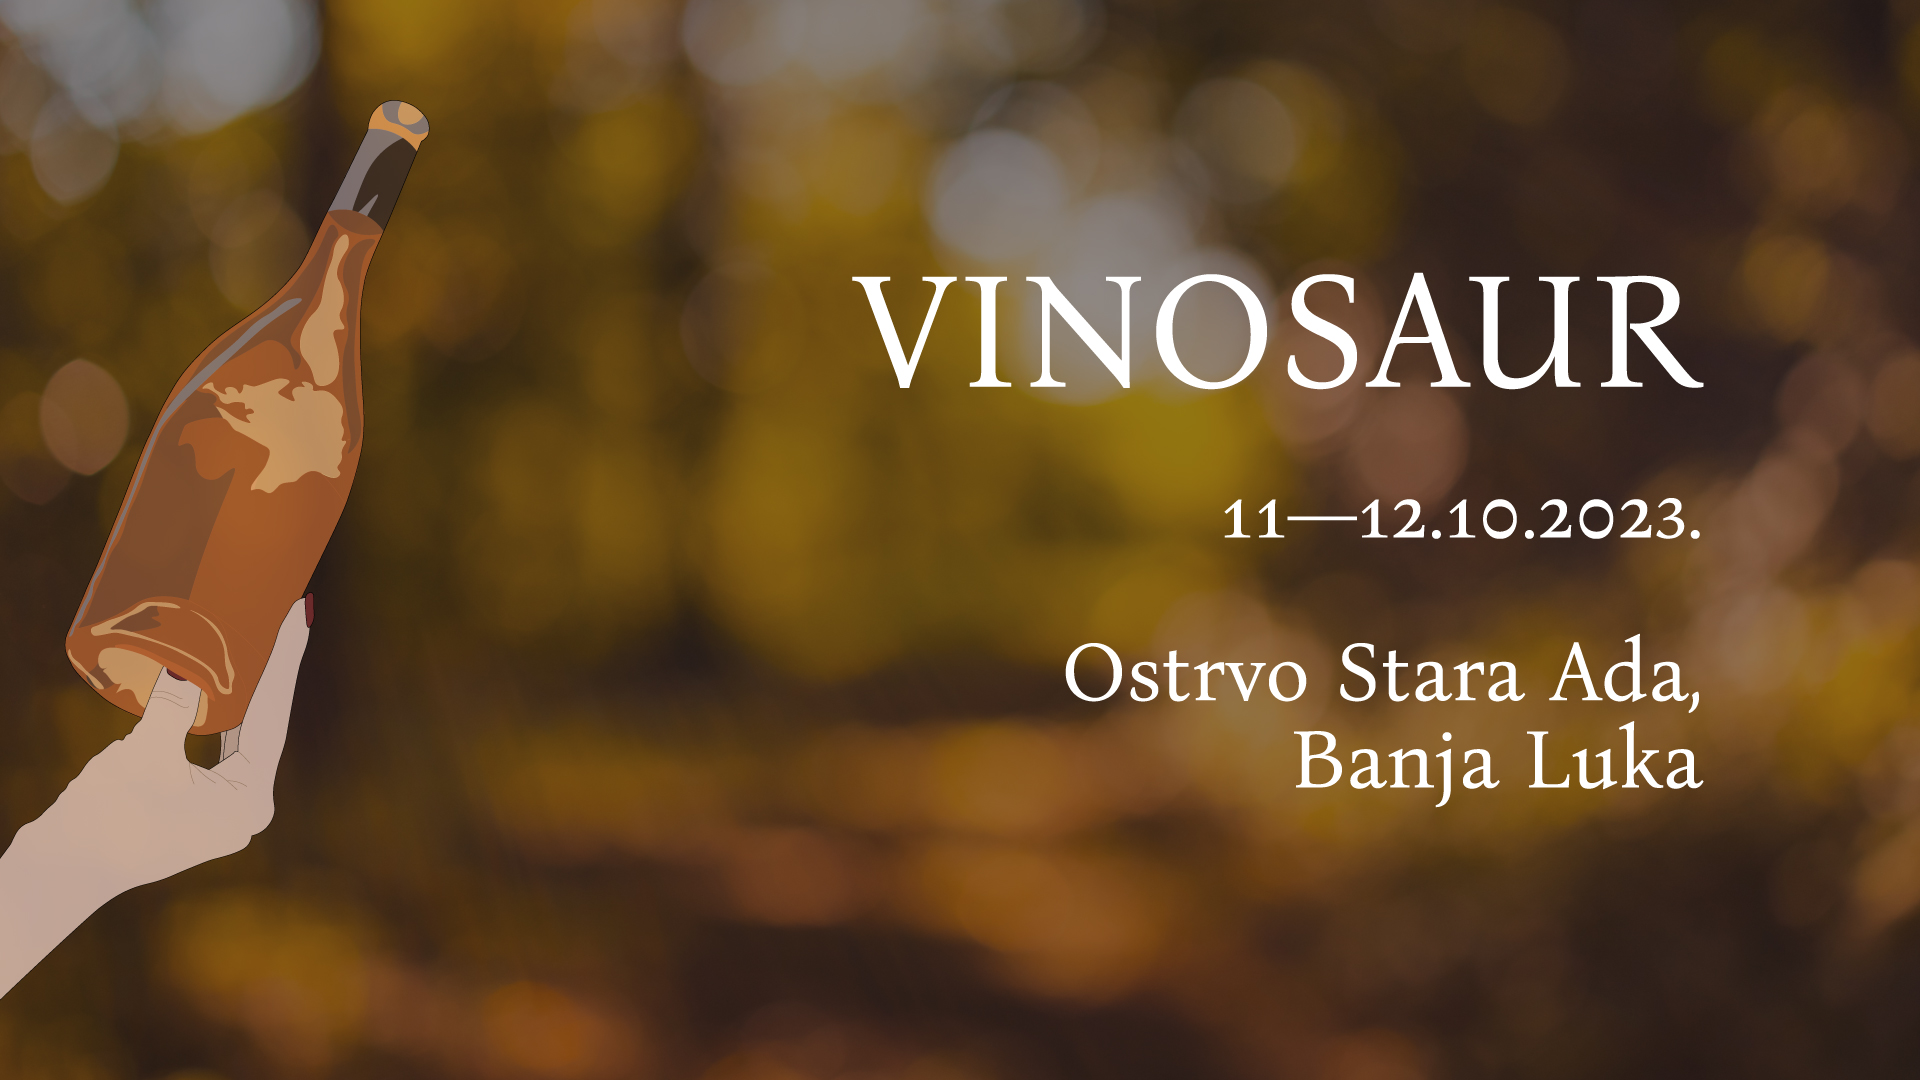 Vinosaur 2023 - Ostrvo Stara Ada, Banja Luka